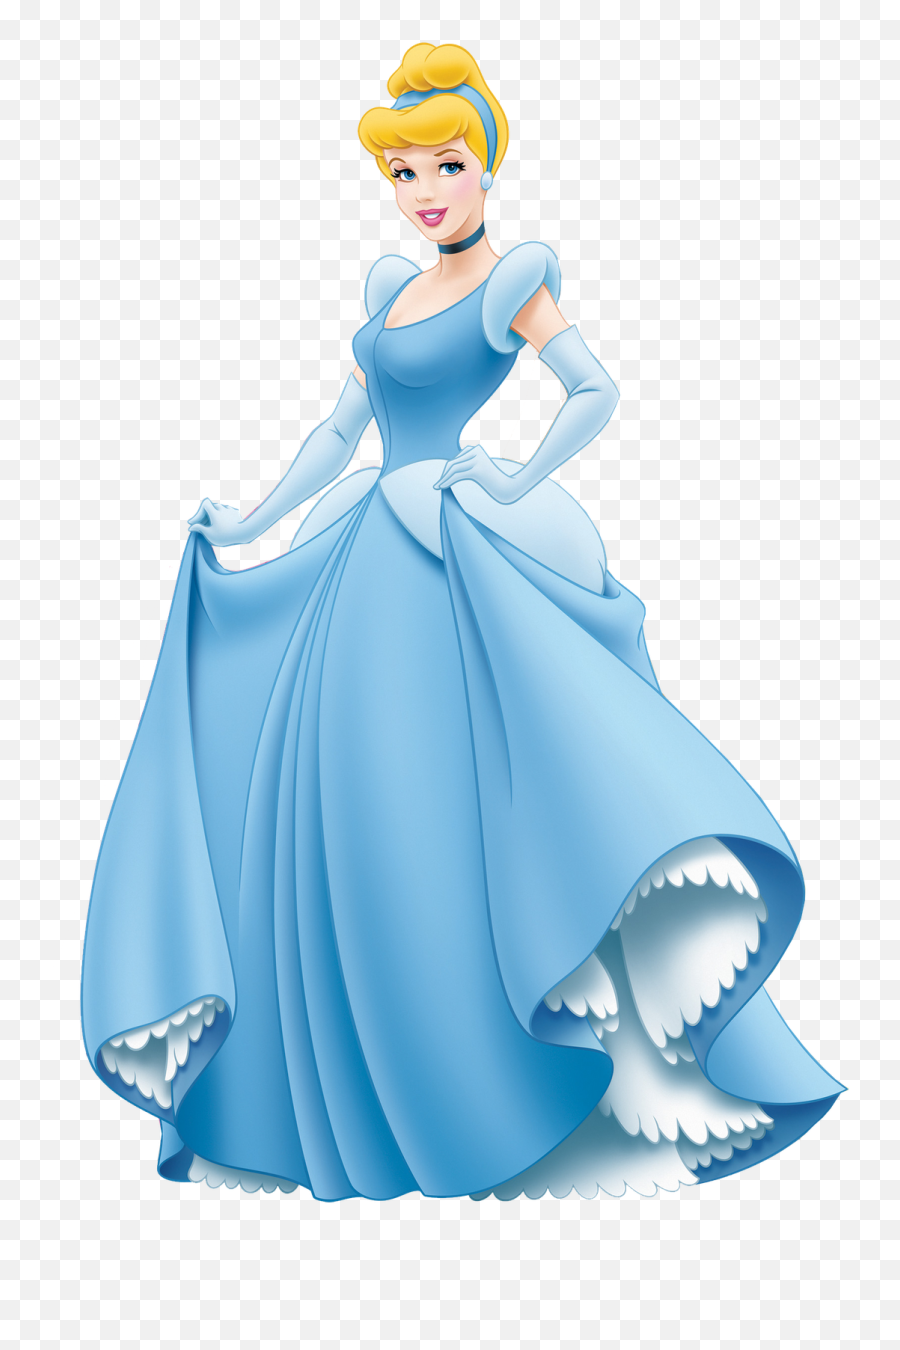 Free Download Png Hq Image - Disney Cinderella,Cinderella Logo Png